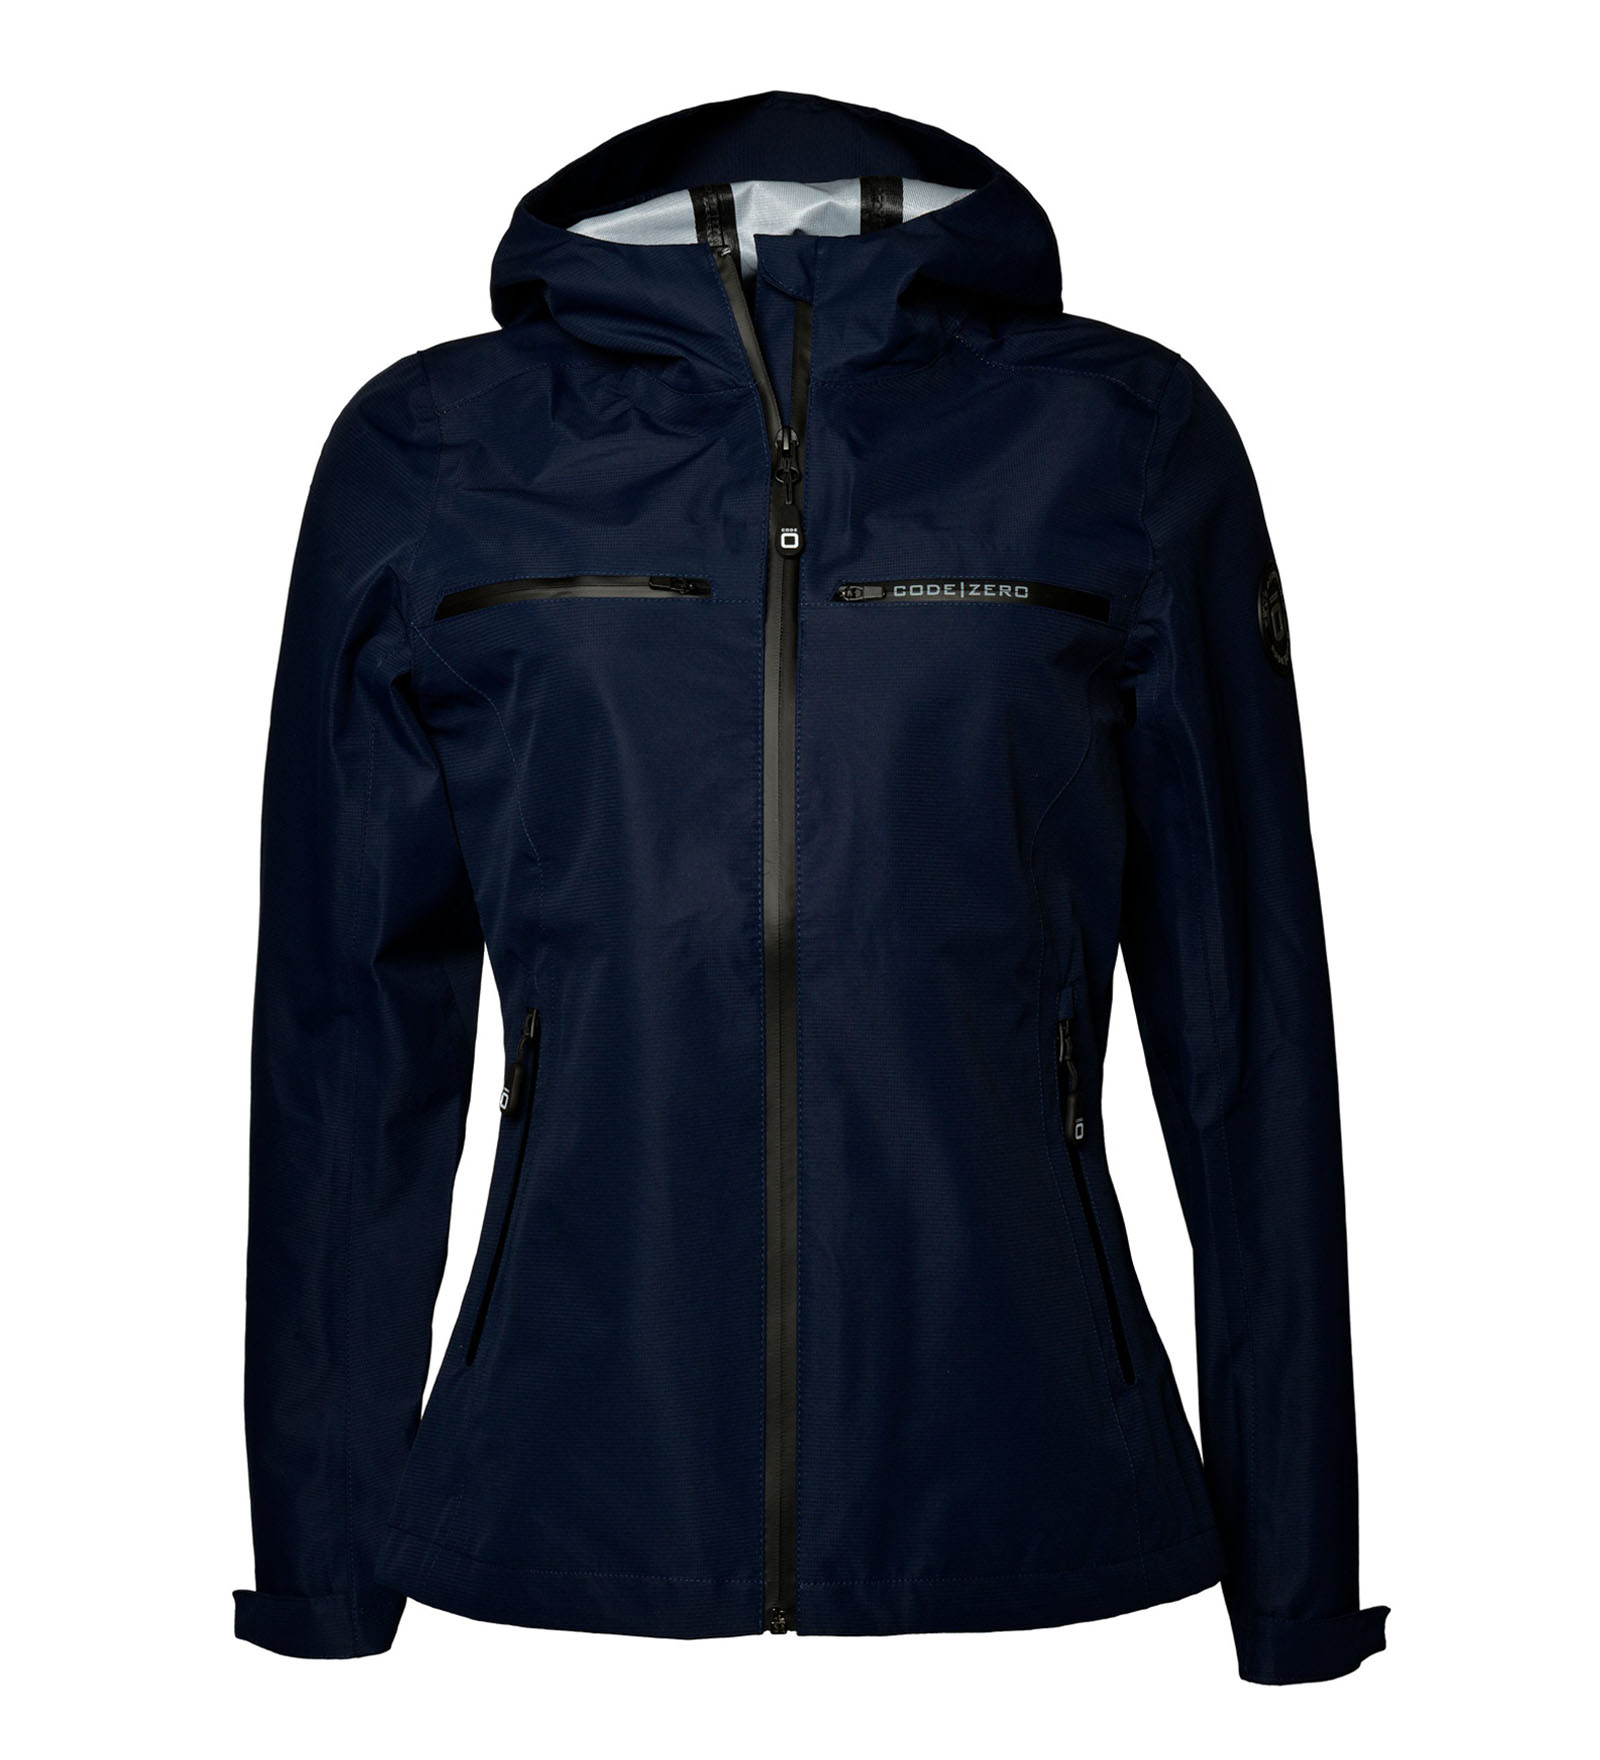 Pikeur Ulita Ladies Fitted Sweat Jacket hooded navy blue size 38 or UK 10 